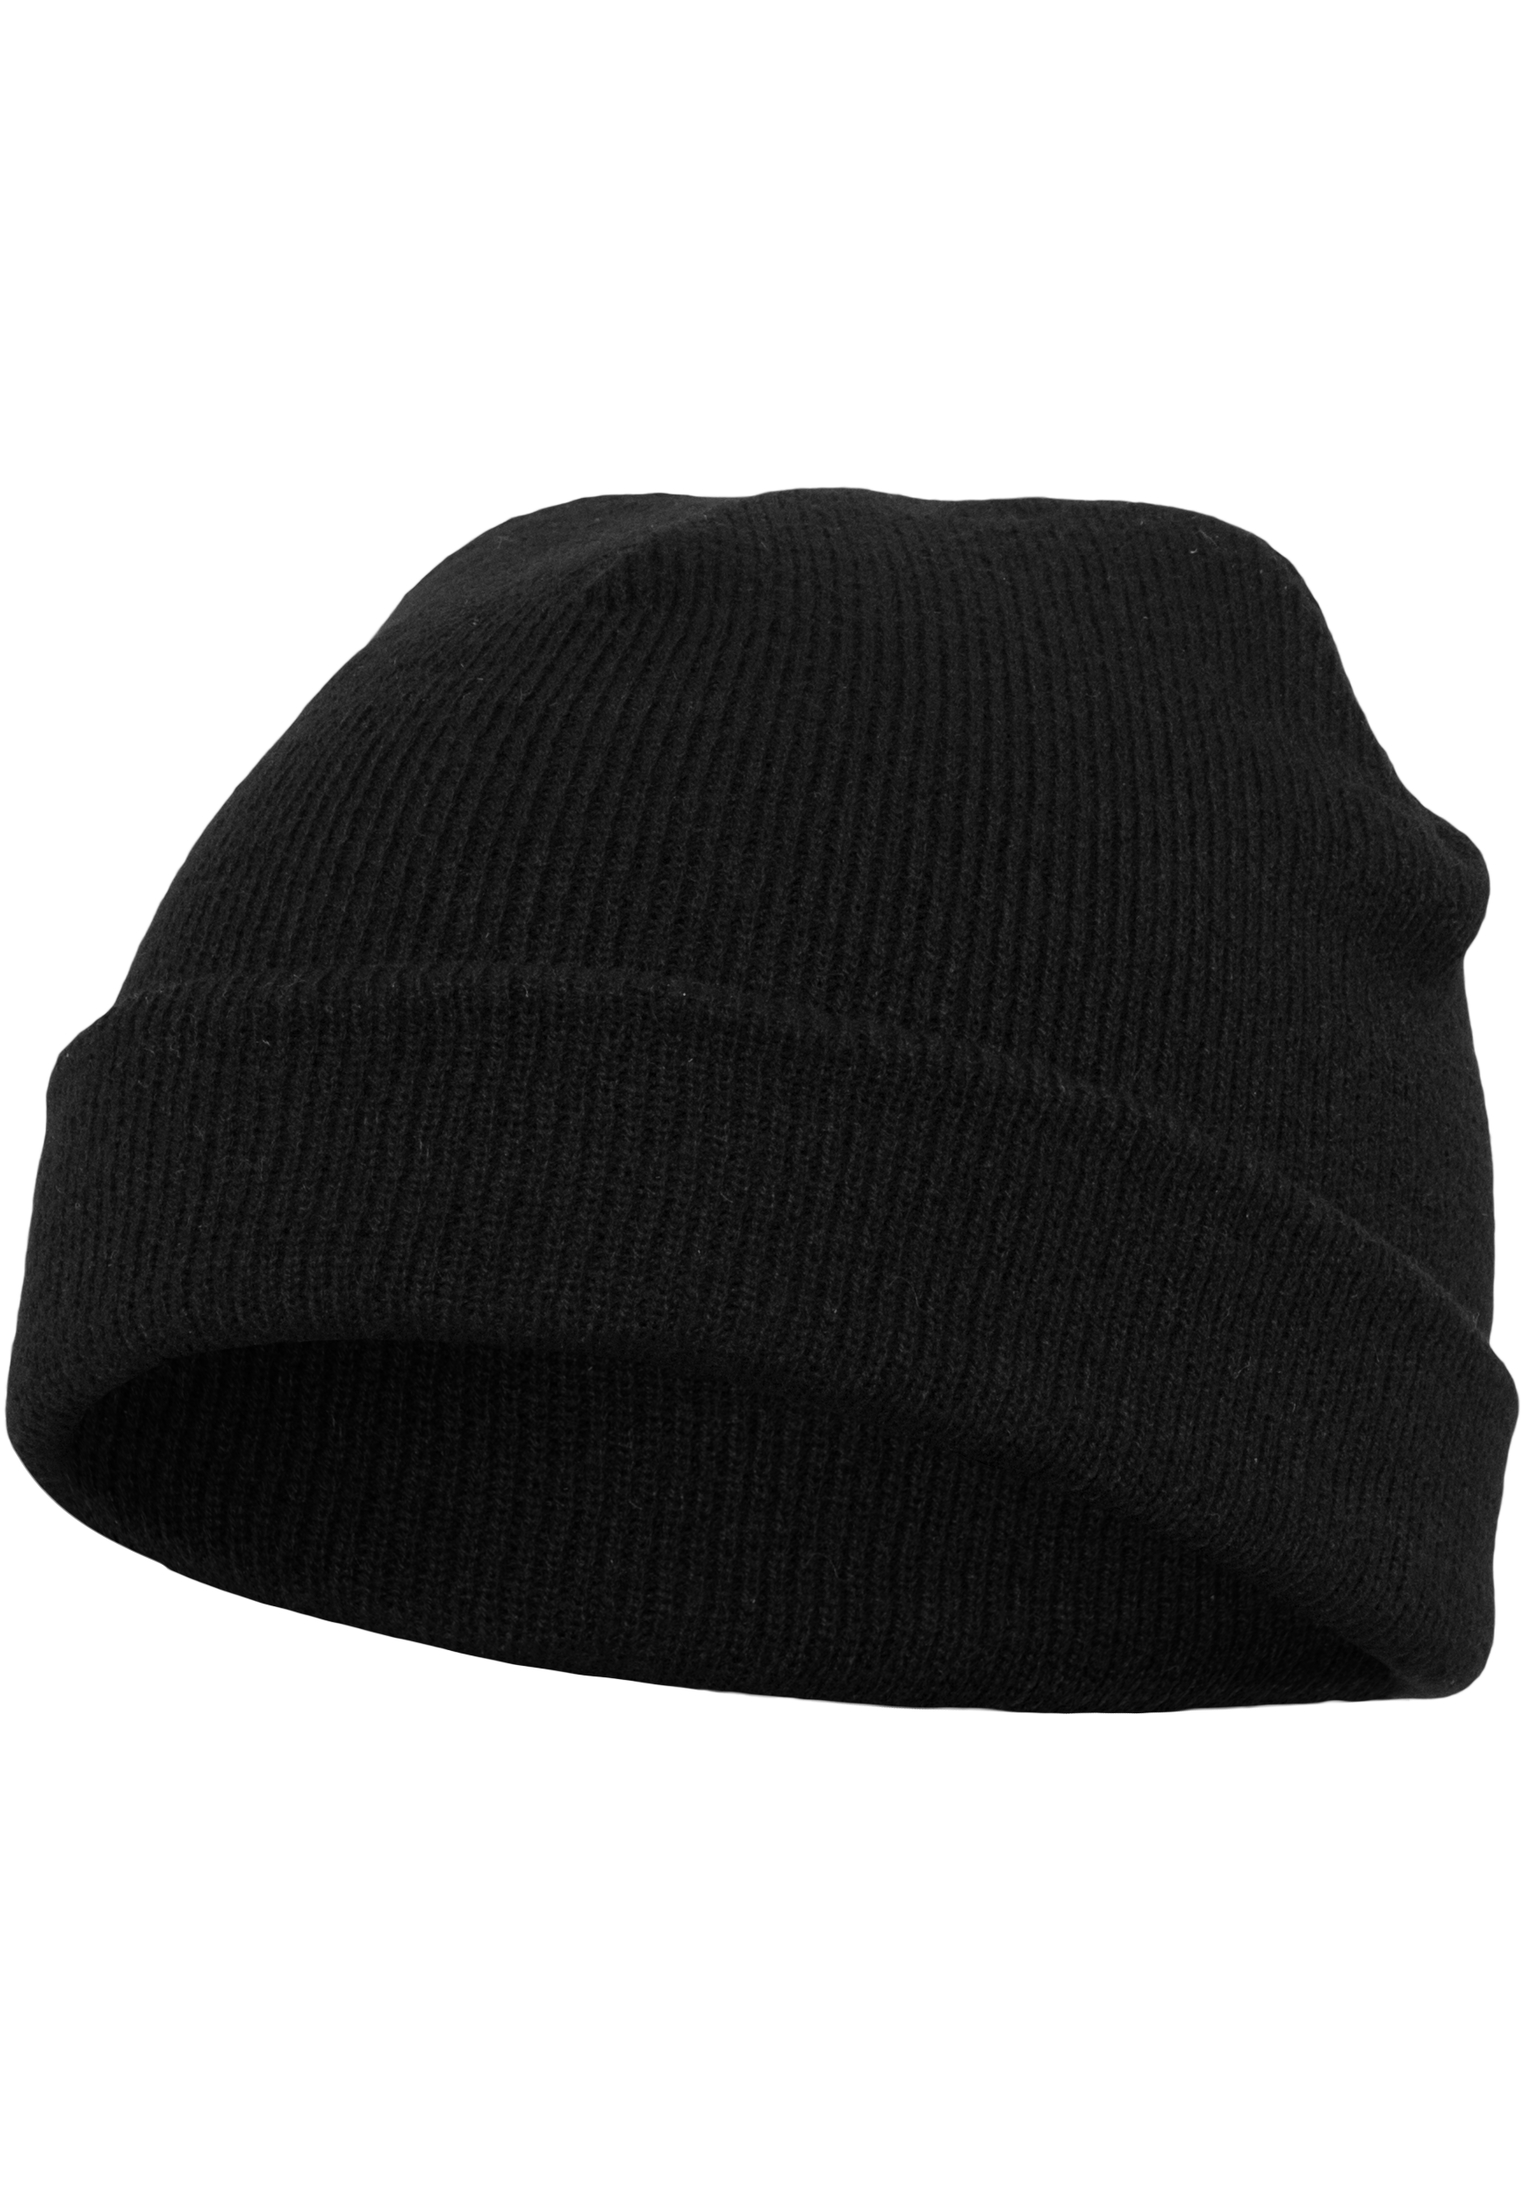 Heavyweight cap black